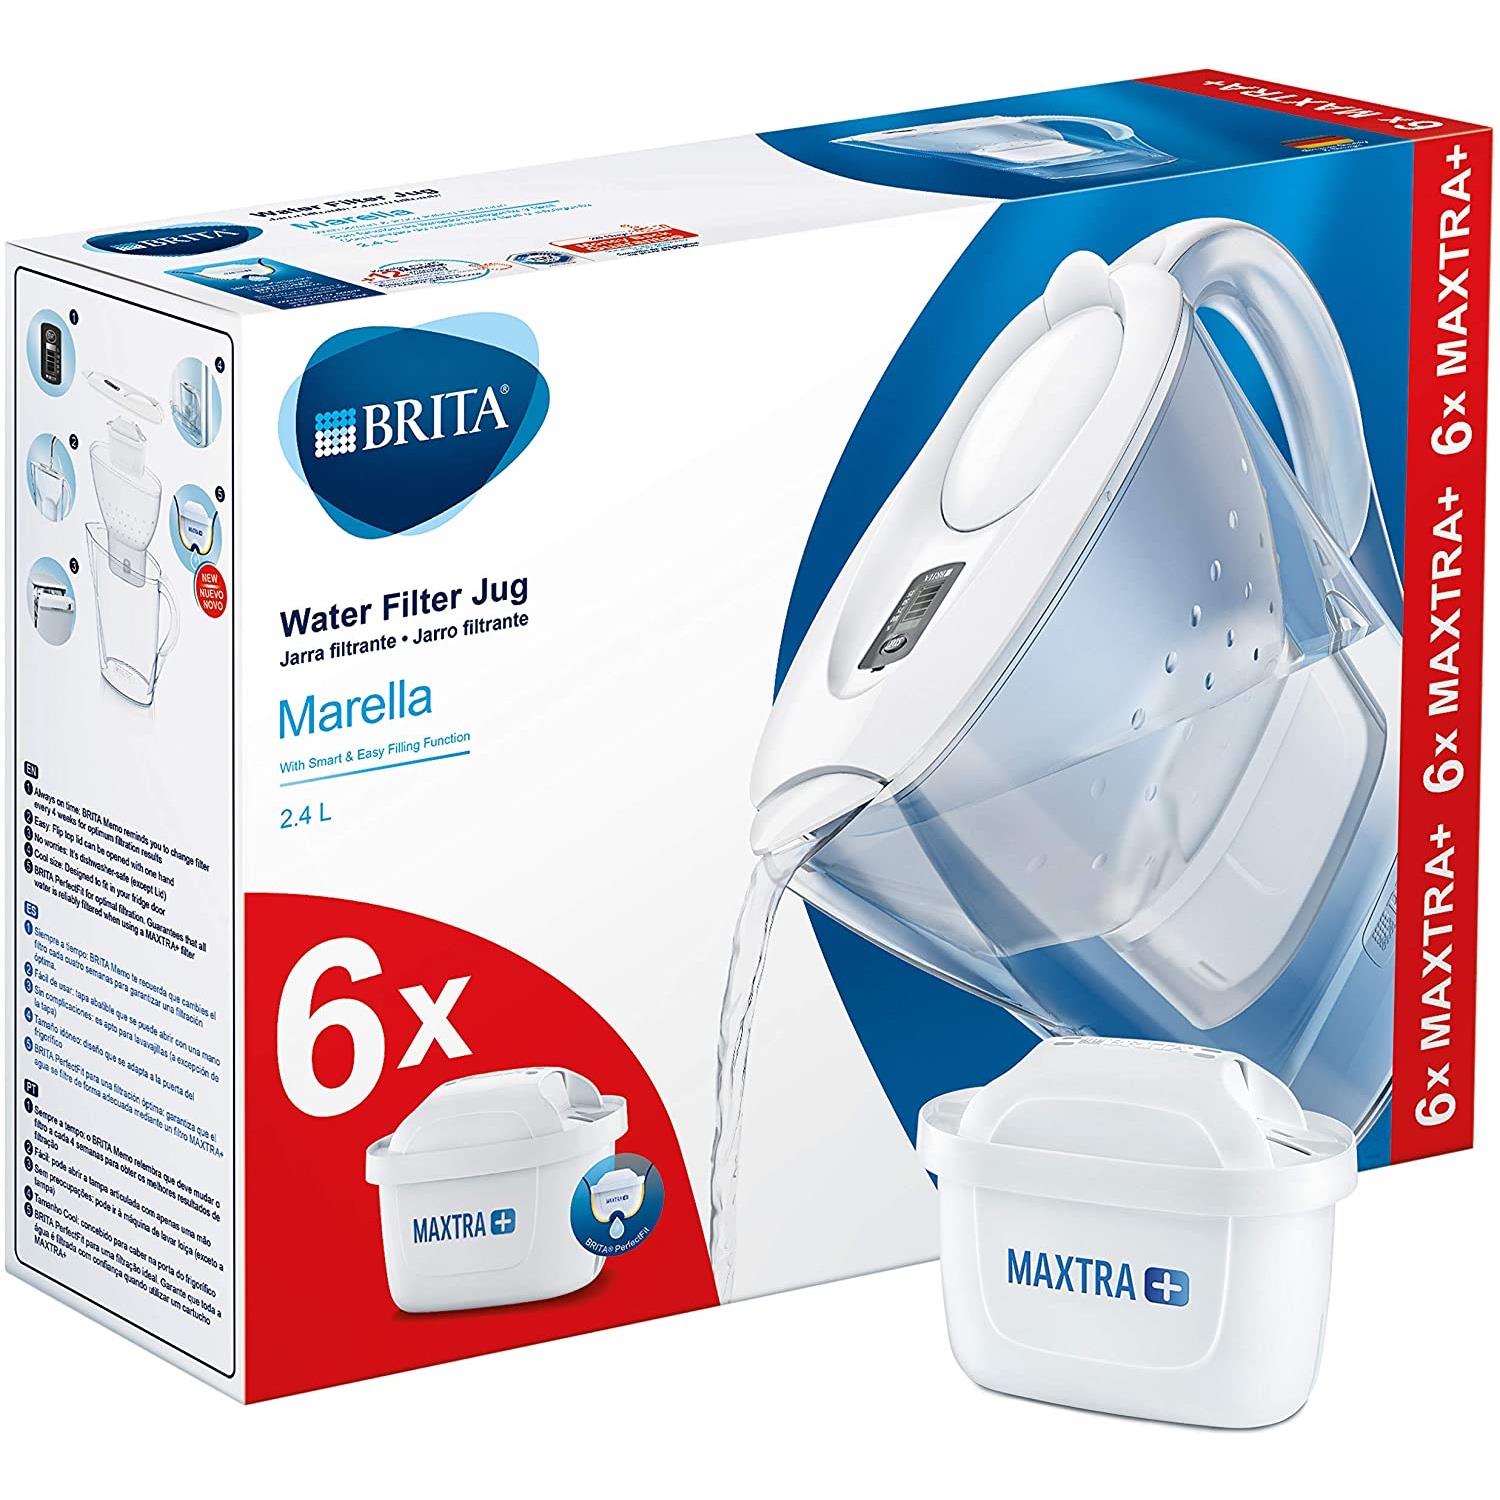 Brita BRITA Marella MAXTRA water filter jug pack with 6 Month Cartridges Brand_New 